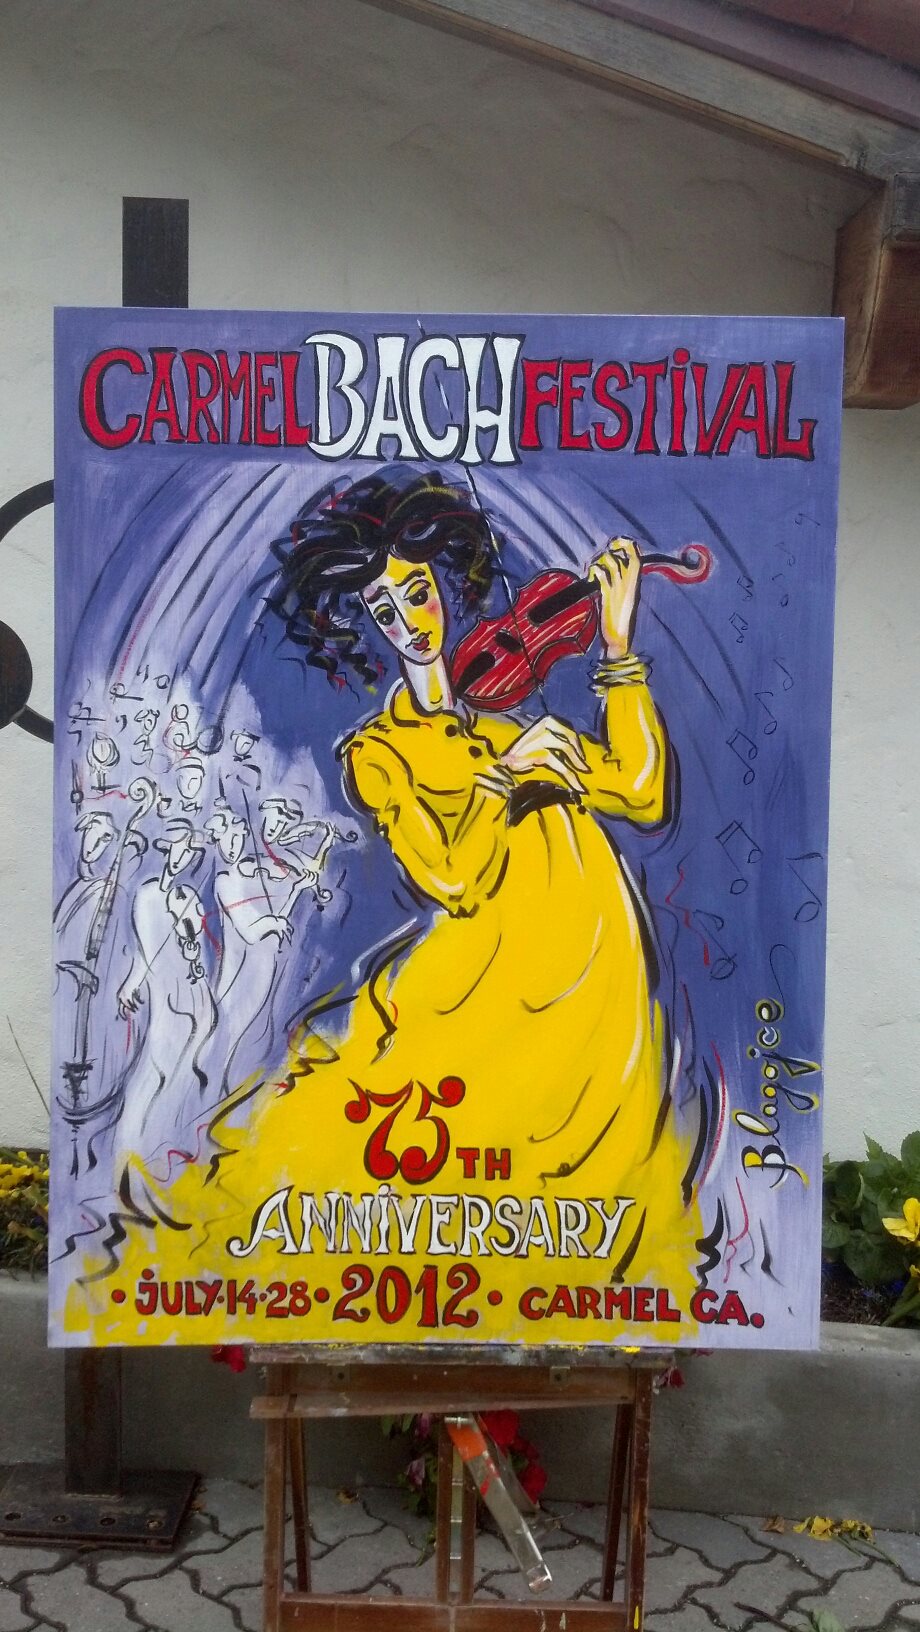 2012 Carmel Bach Festival Poster - in progress